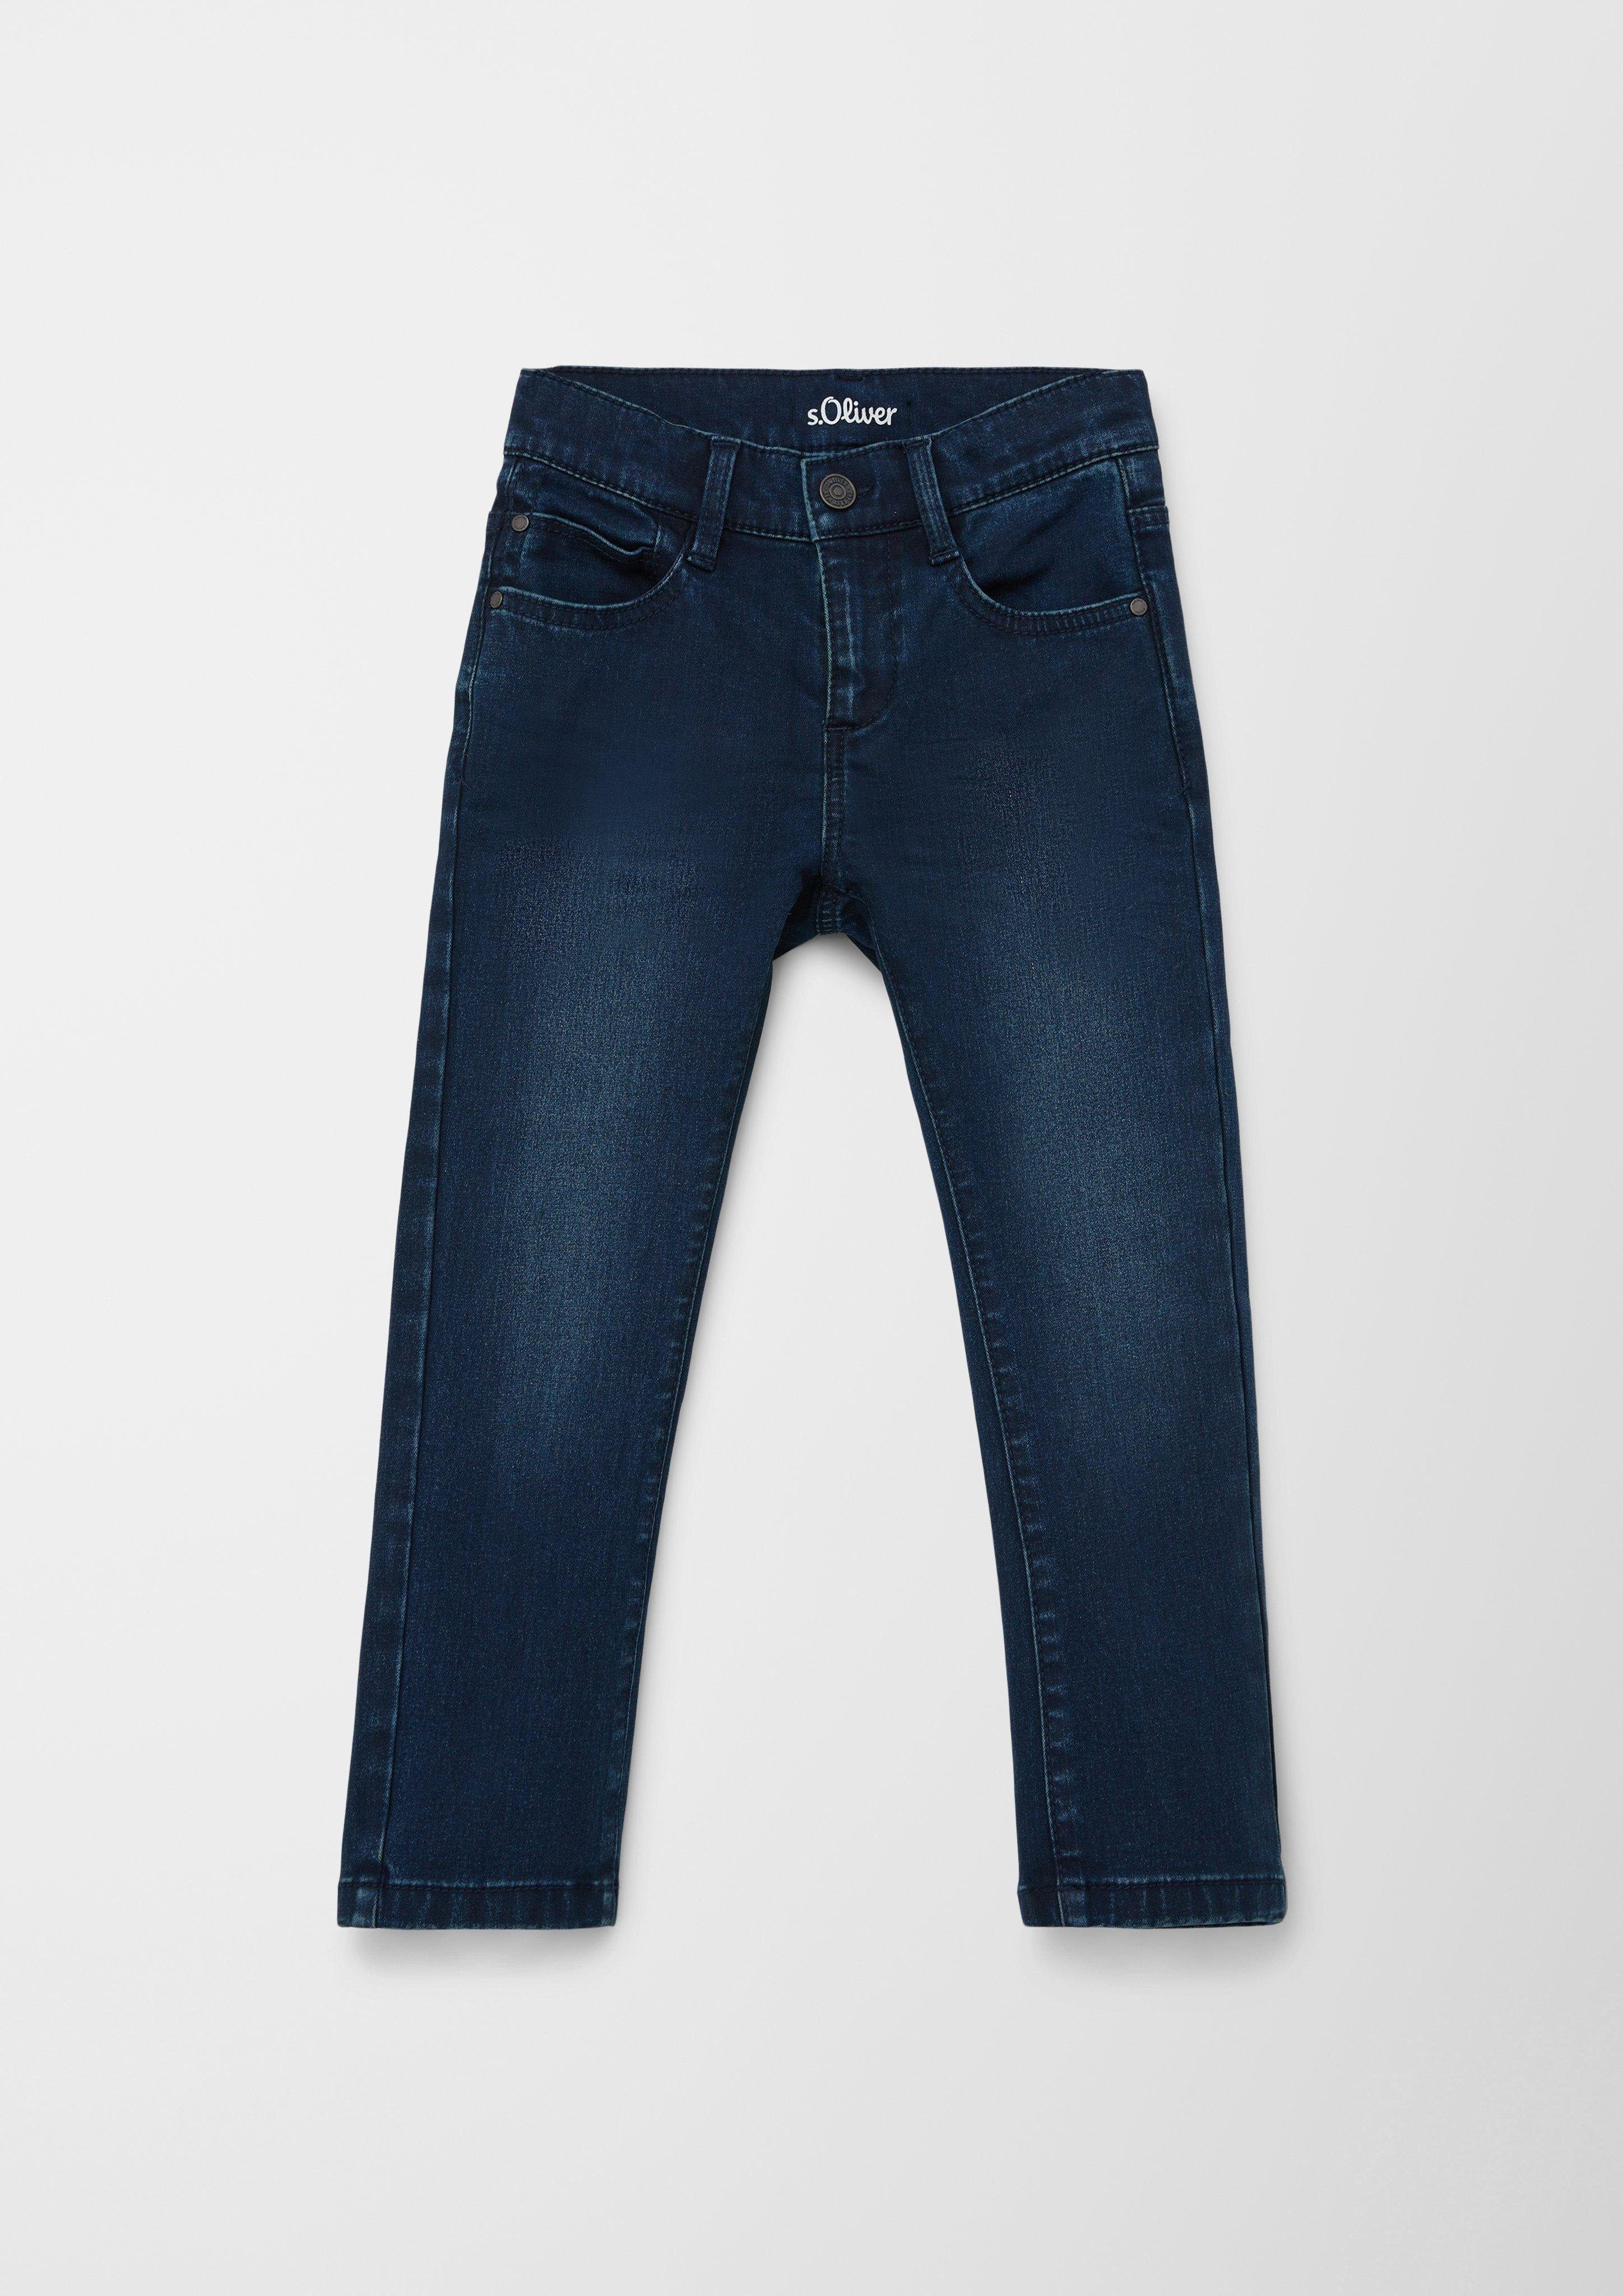 s.Oliver 5-Pocket-Jeans Jeans Pelle / Regular Fit / Mid Rise / Straight Leg / Used-Look Kontrastnähte, Waschung